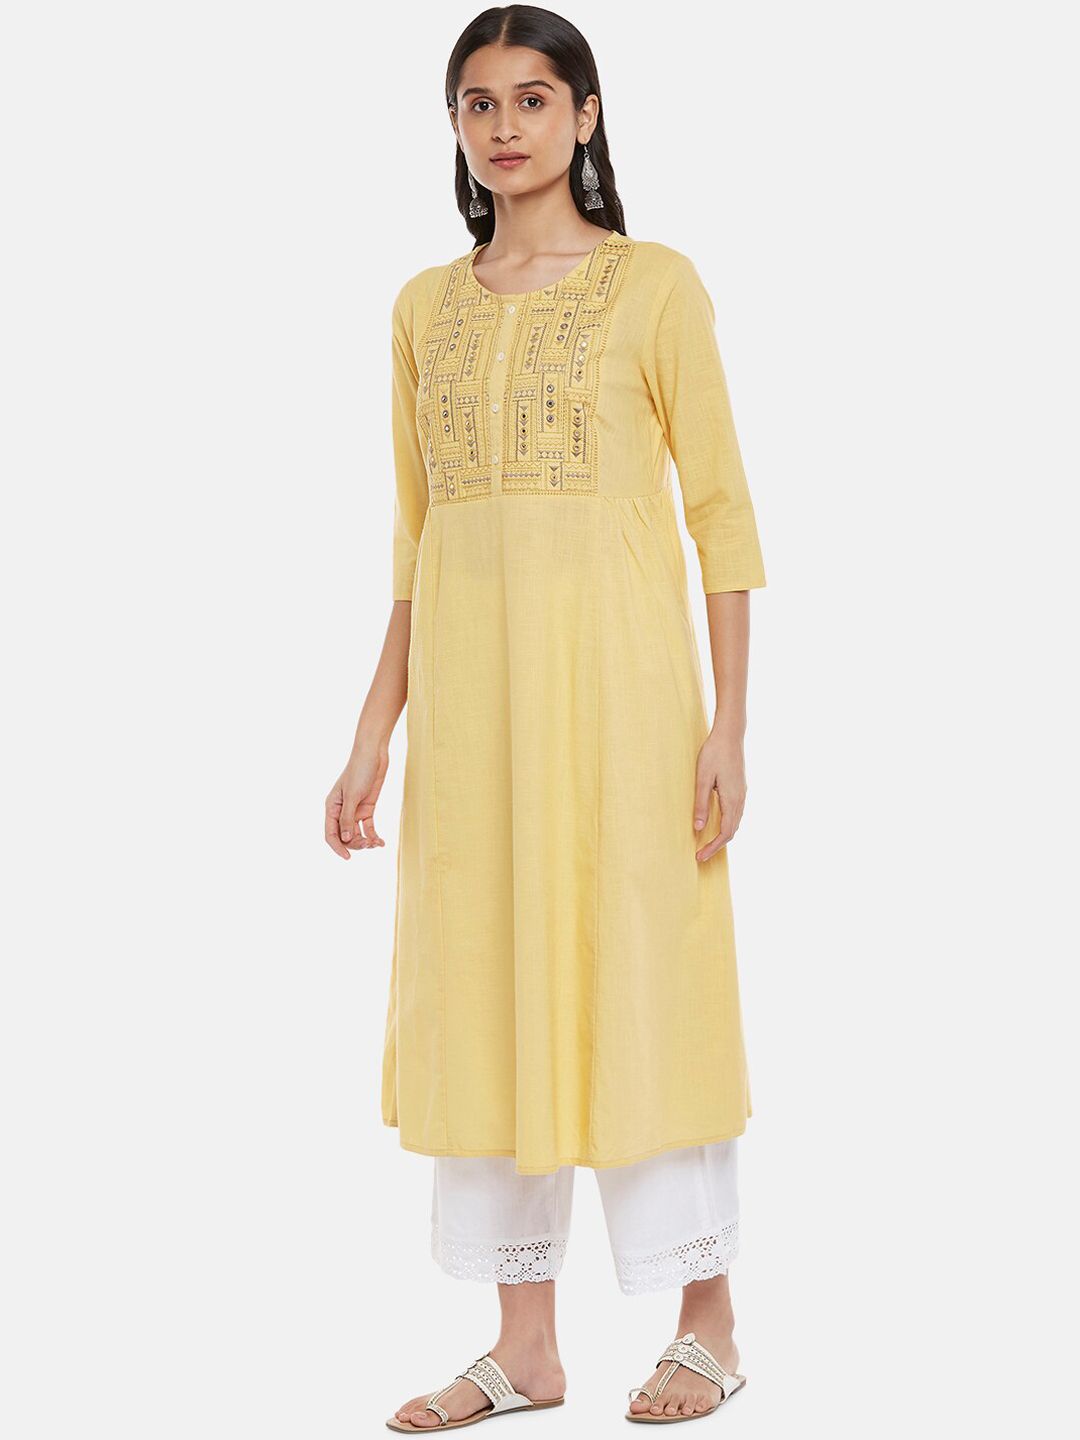 RANGMANCH BY PANTALOONS Women Mustard Yellow Yoke Design Flared Sleeves Thread Work Anarkali Kurta Price in India